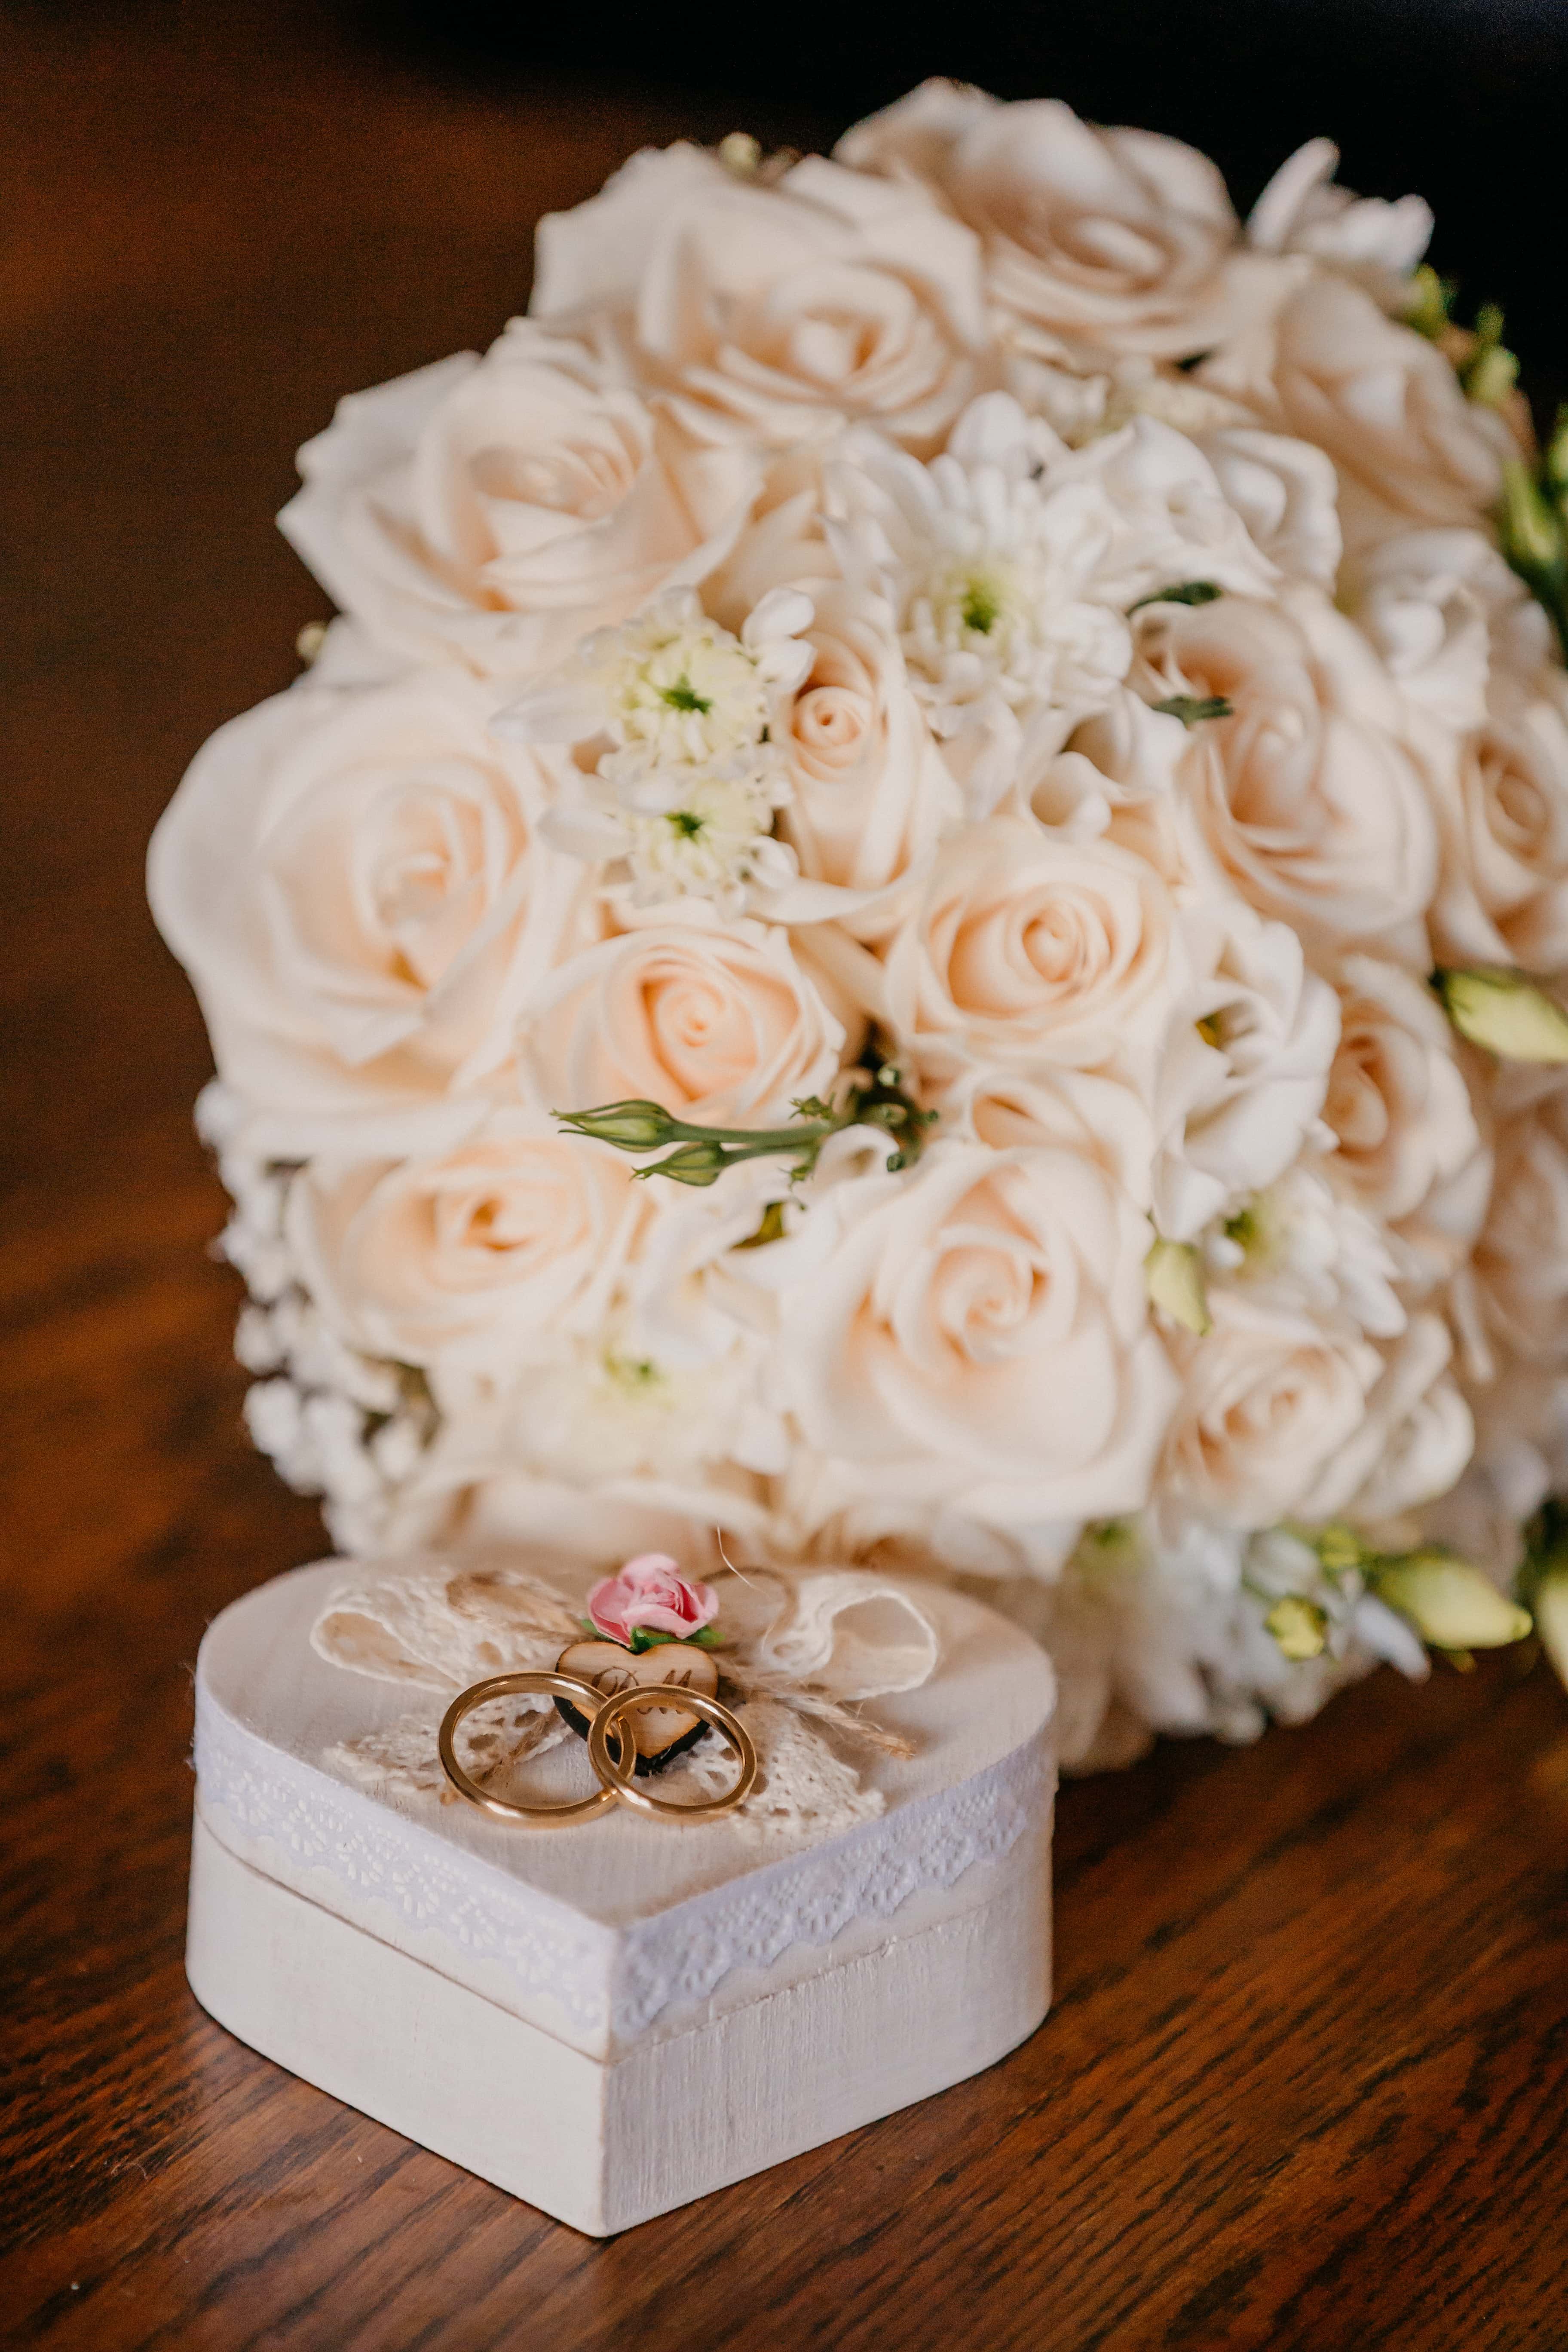 Imagen gratis: coraz\u00f3n, anillo de bodas, resplandor de oro, caja, ramo ...